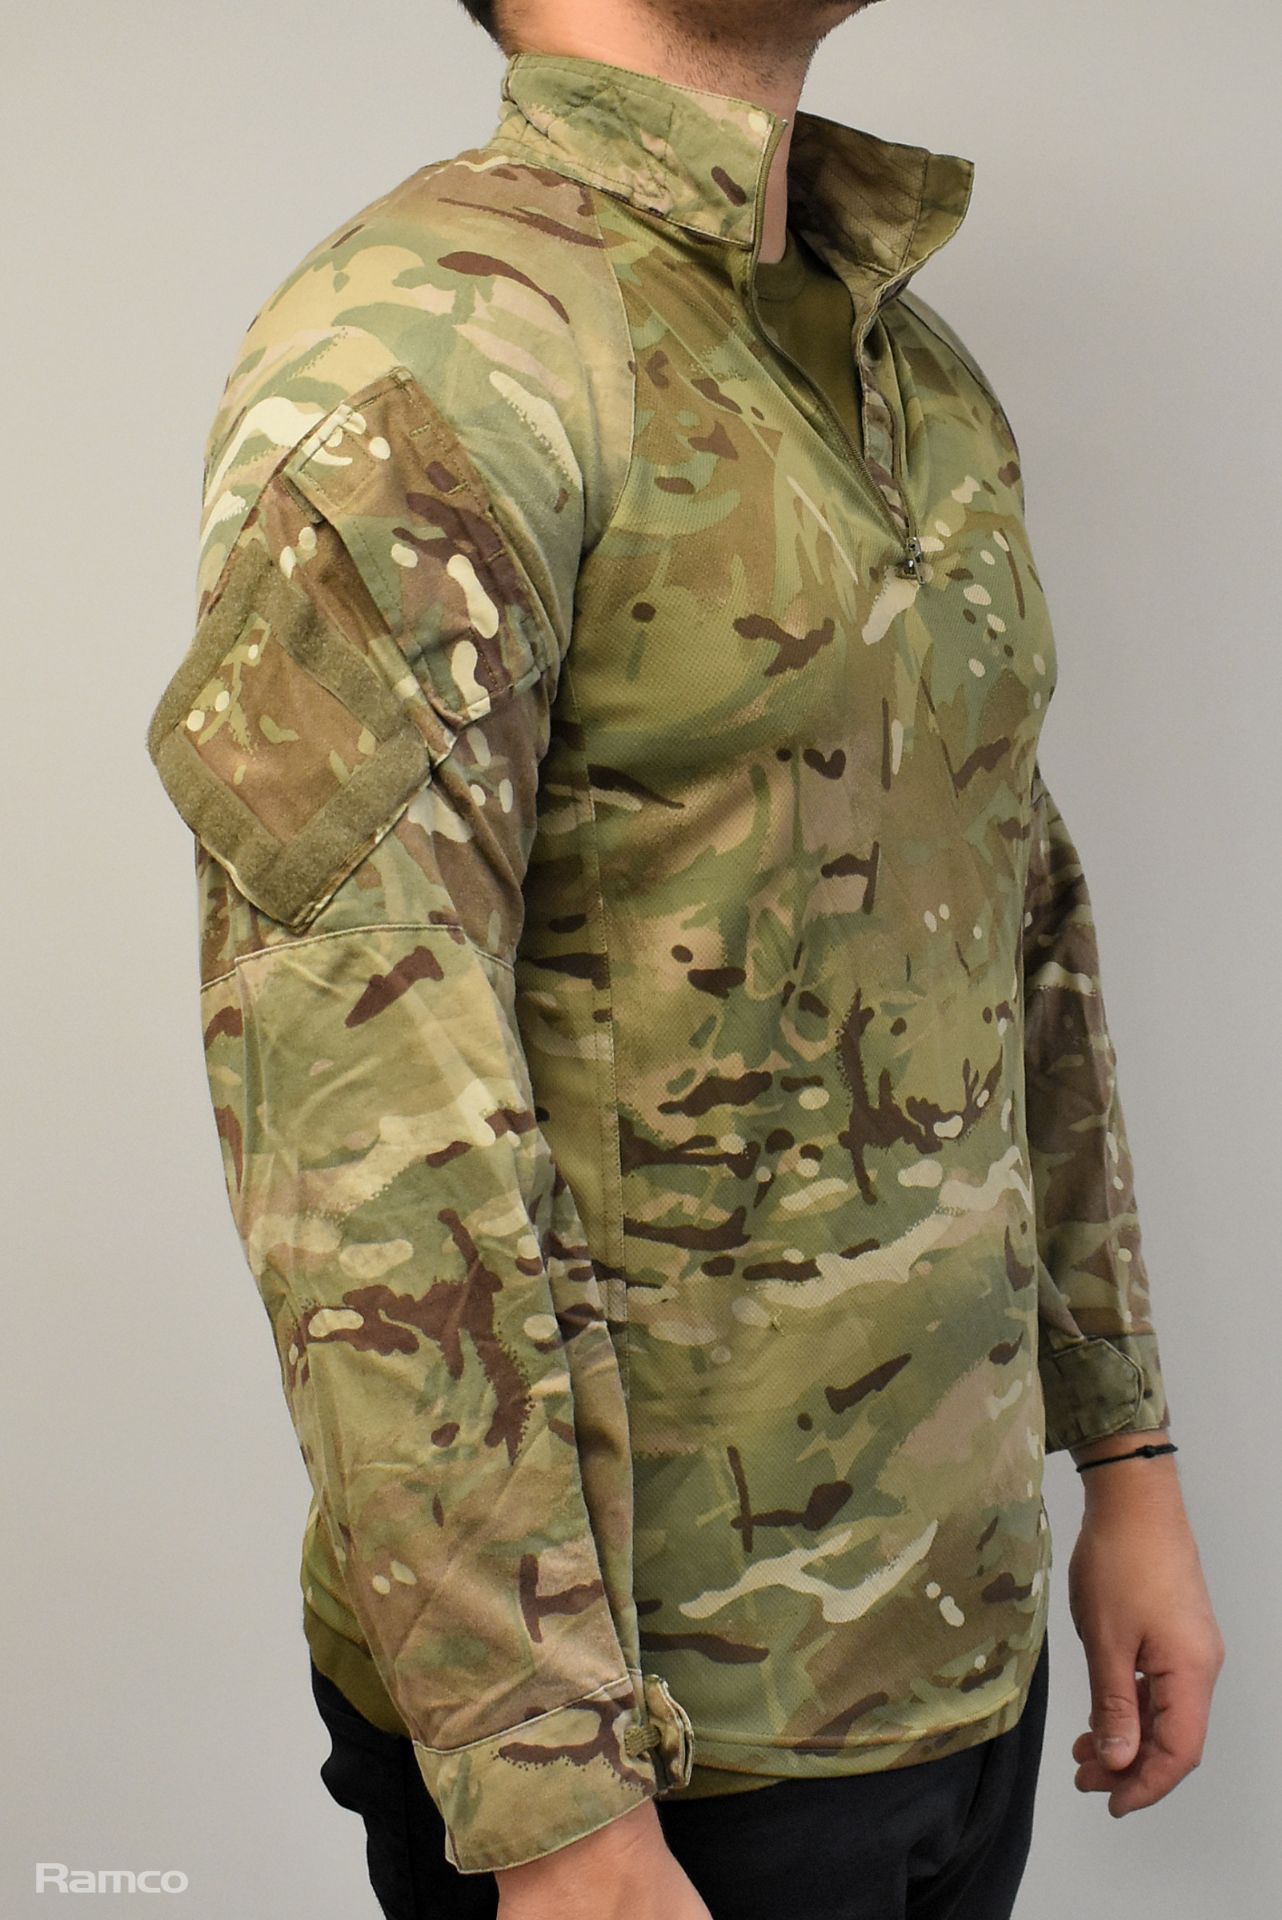 100x British Army MTP UBAC's shirts - mixed types - mixed grades and sizes - Image 4 of 9